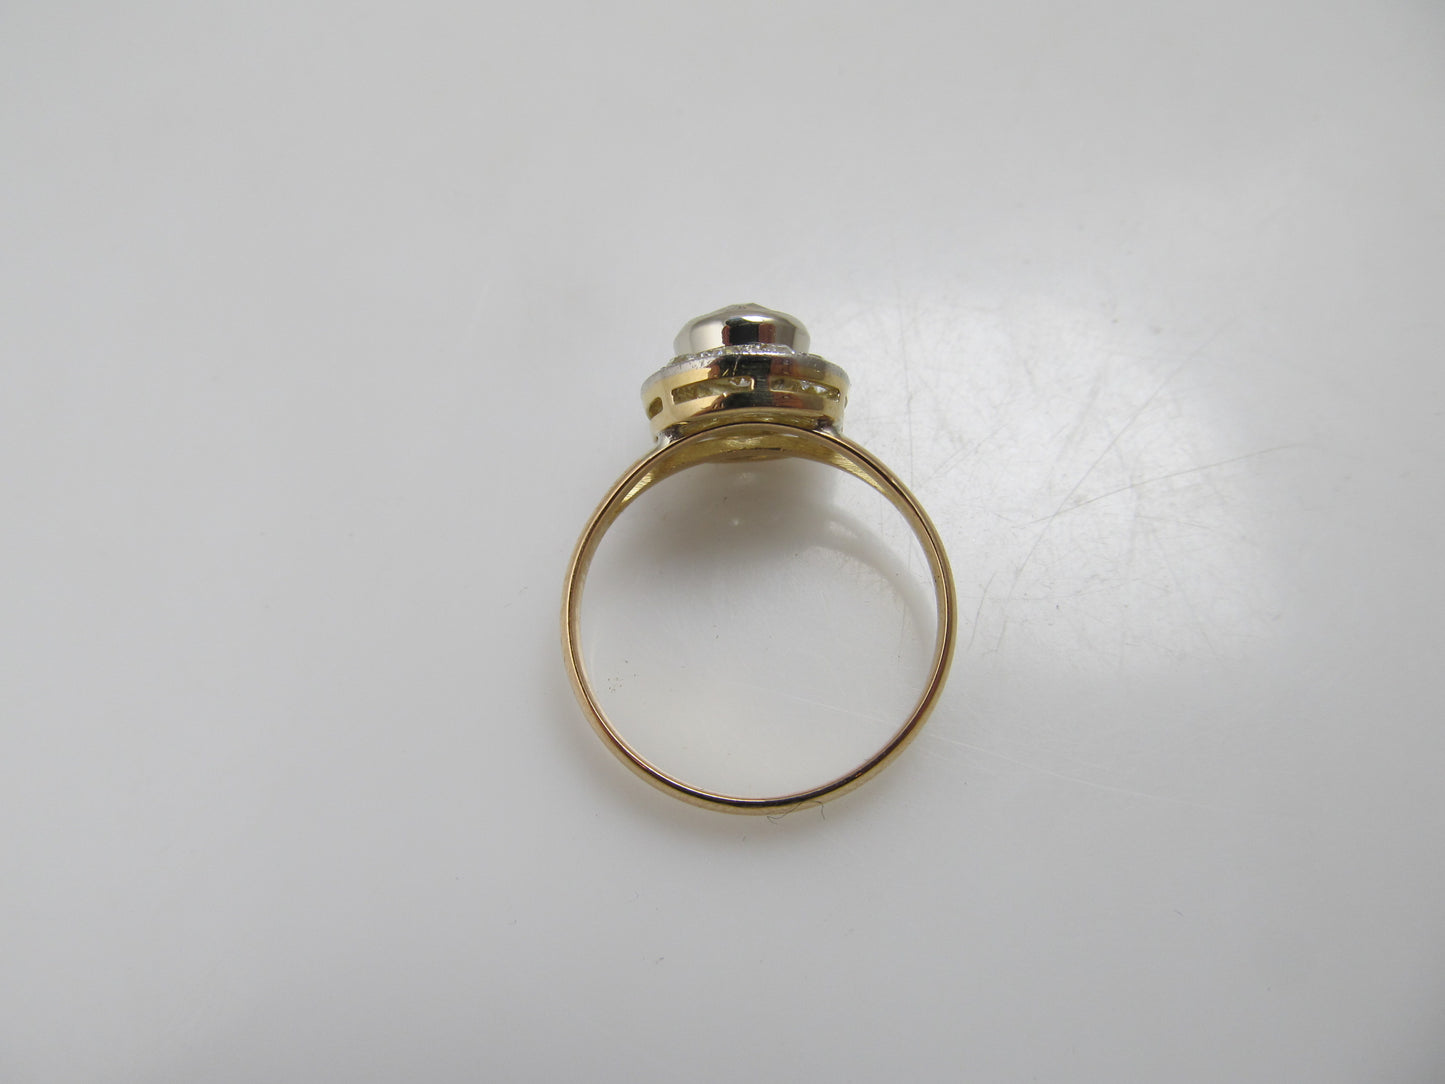 Antique 1.17 diamond engagement ring, platinum & yellow gold